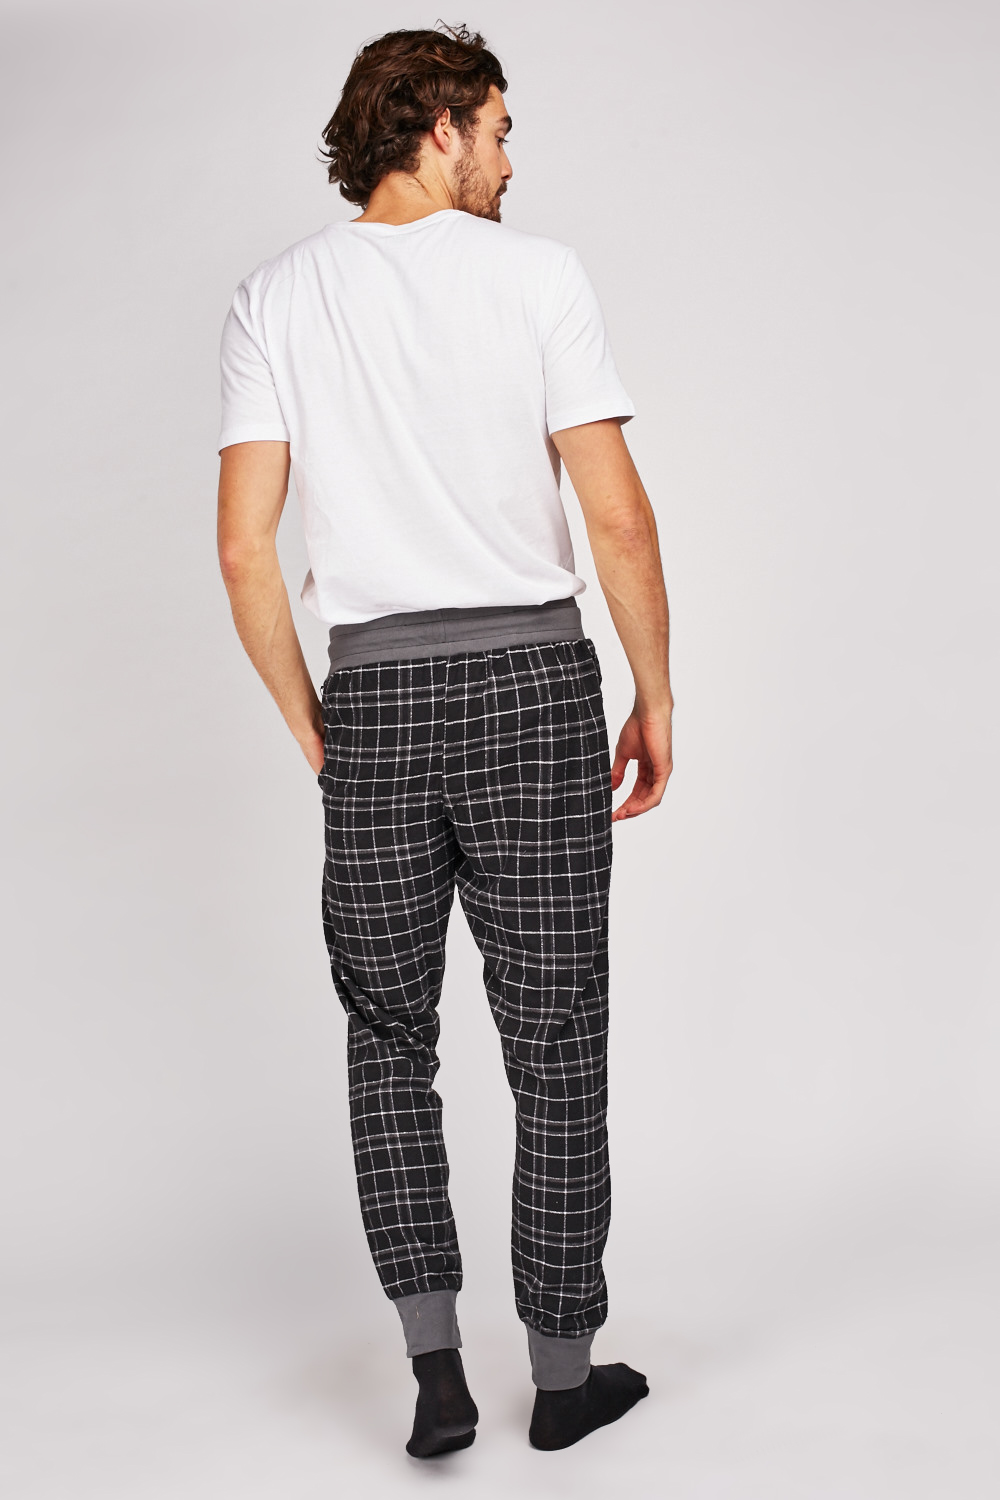 Checkered Pyjama Bottoms - Just $7